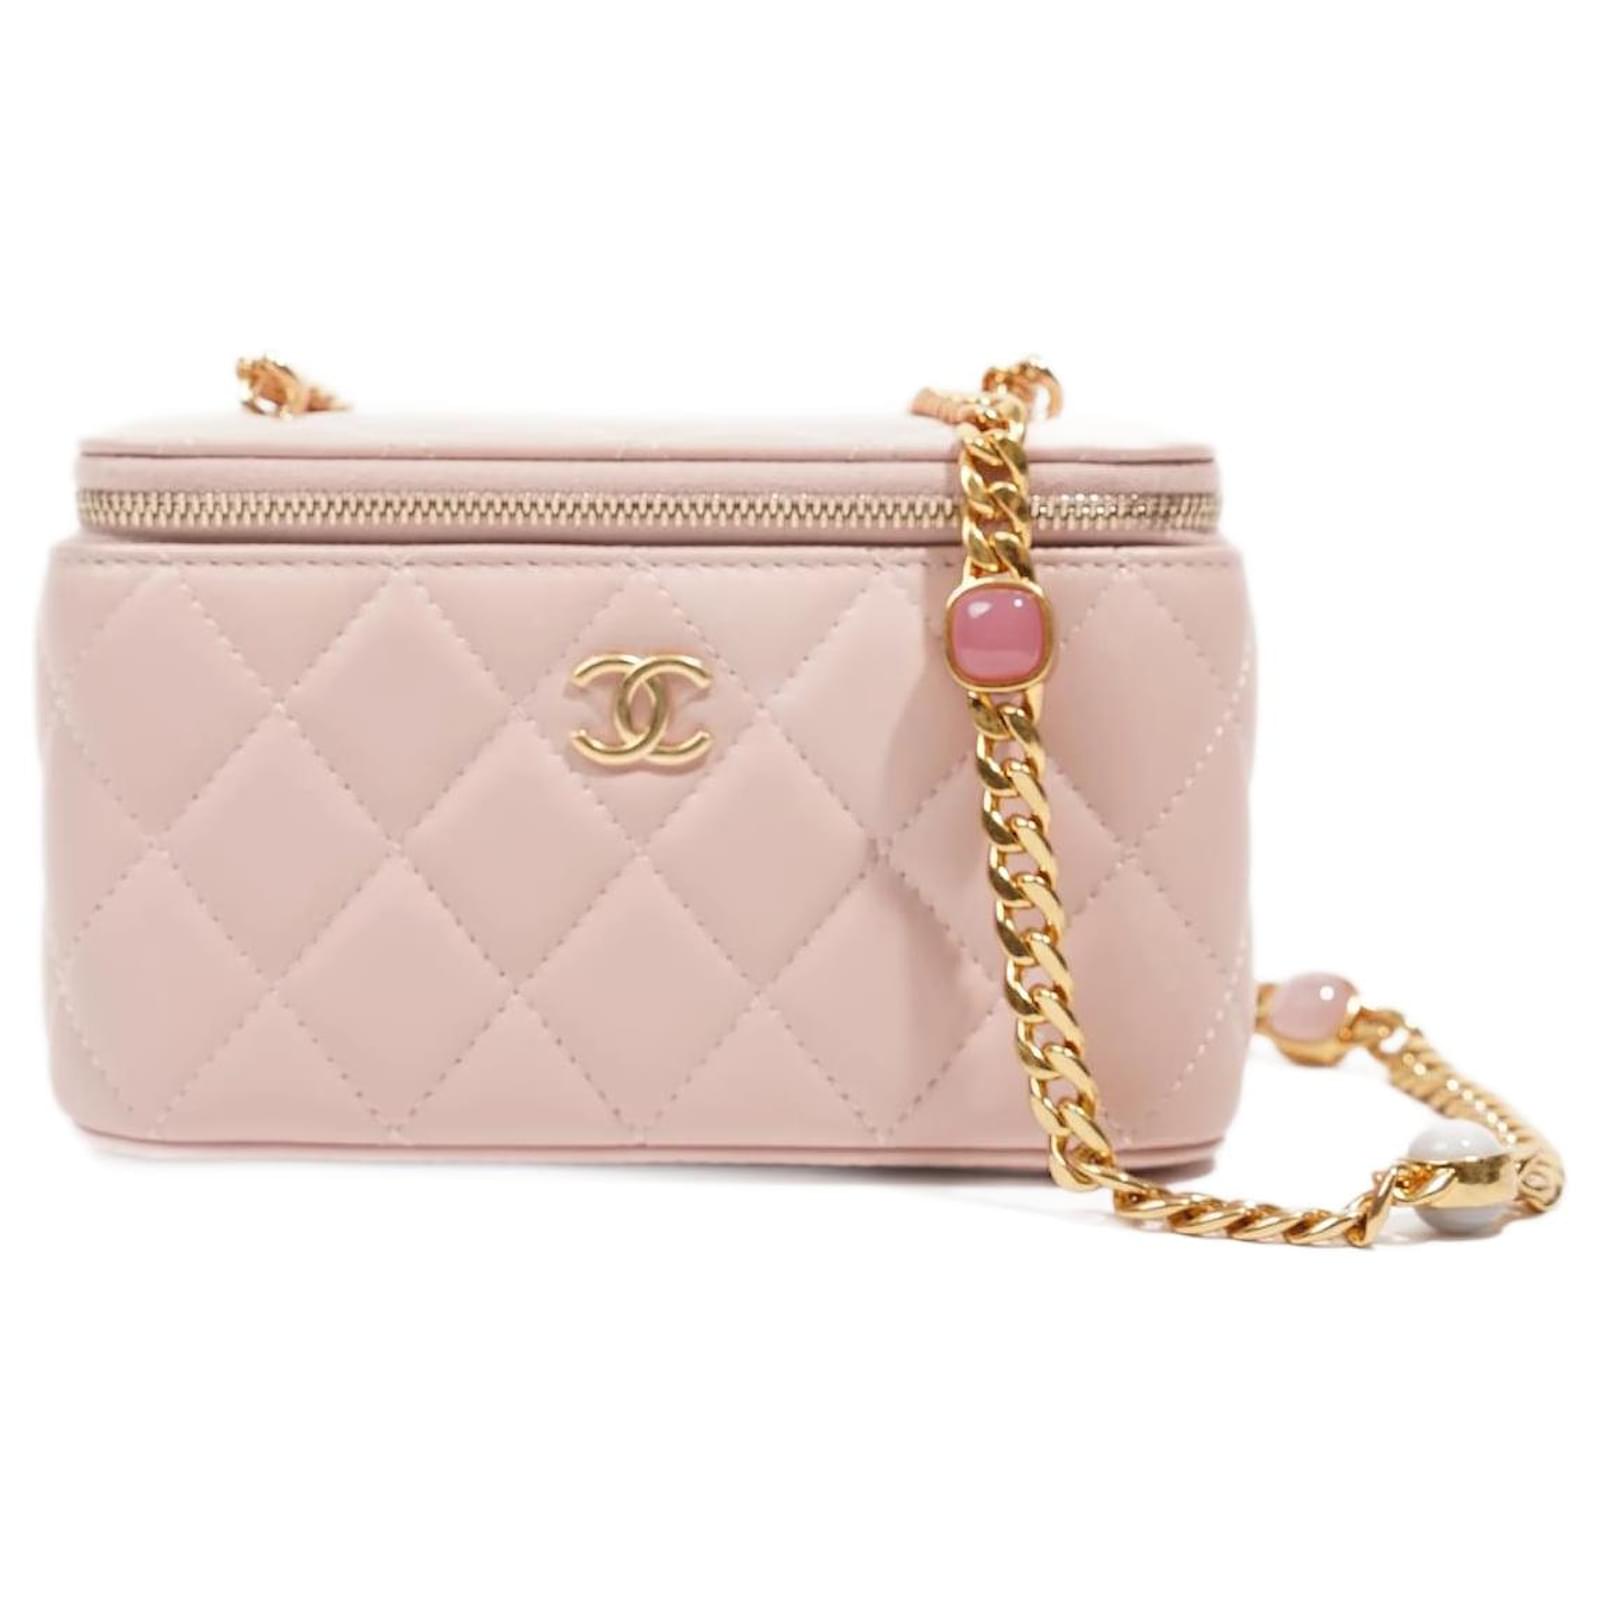 Handbags Chanel Chanel Womens Vanity Case with Jewel Chain